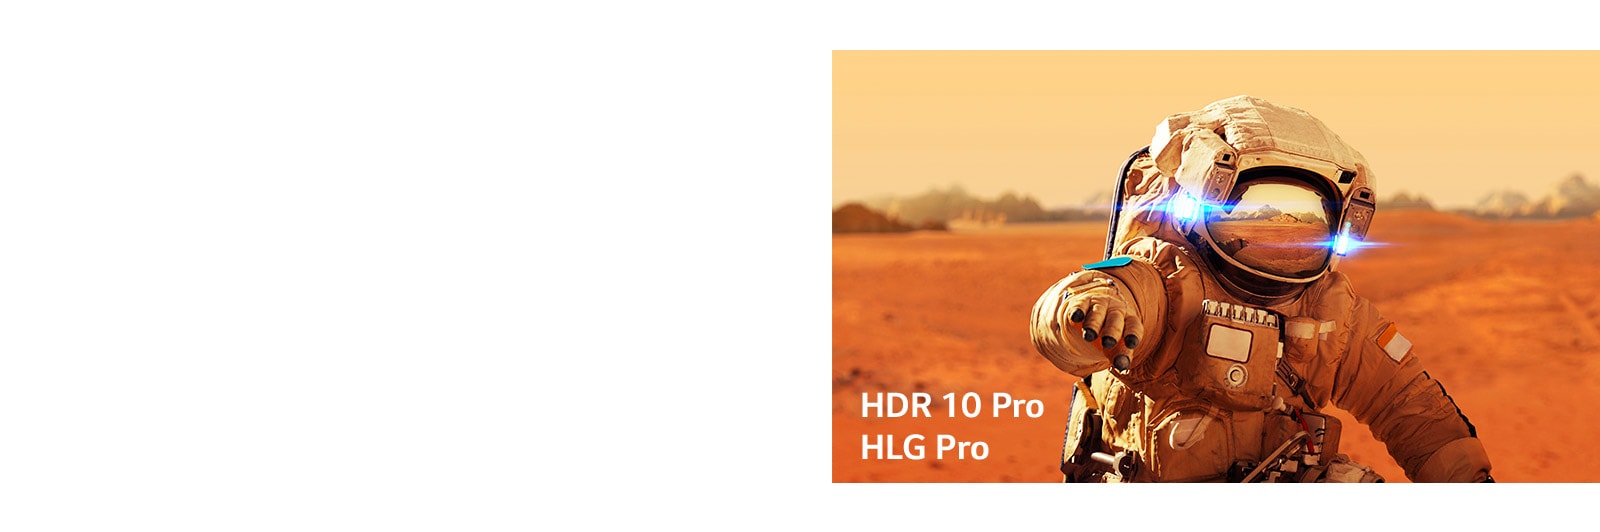 Marvel Iron Man, naslovne kartice s logotipima HLG Pro i HDR 10 Pro